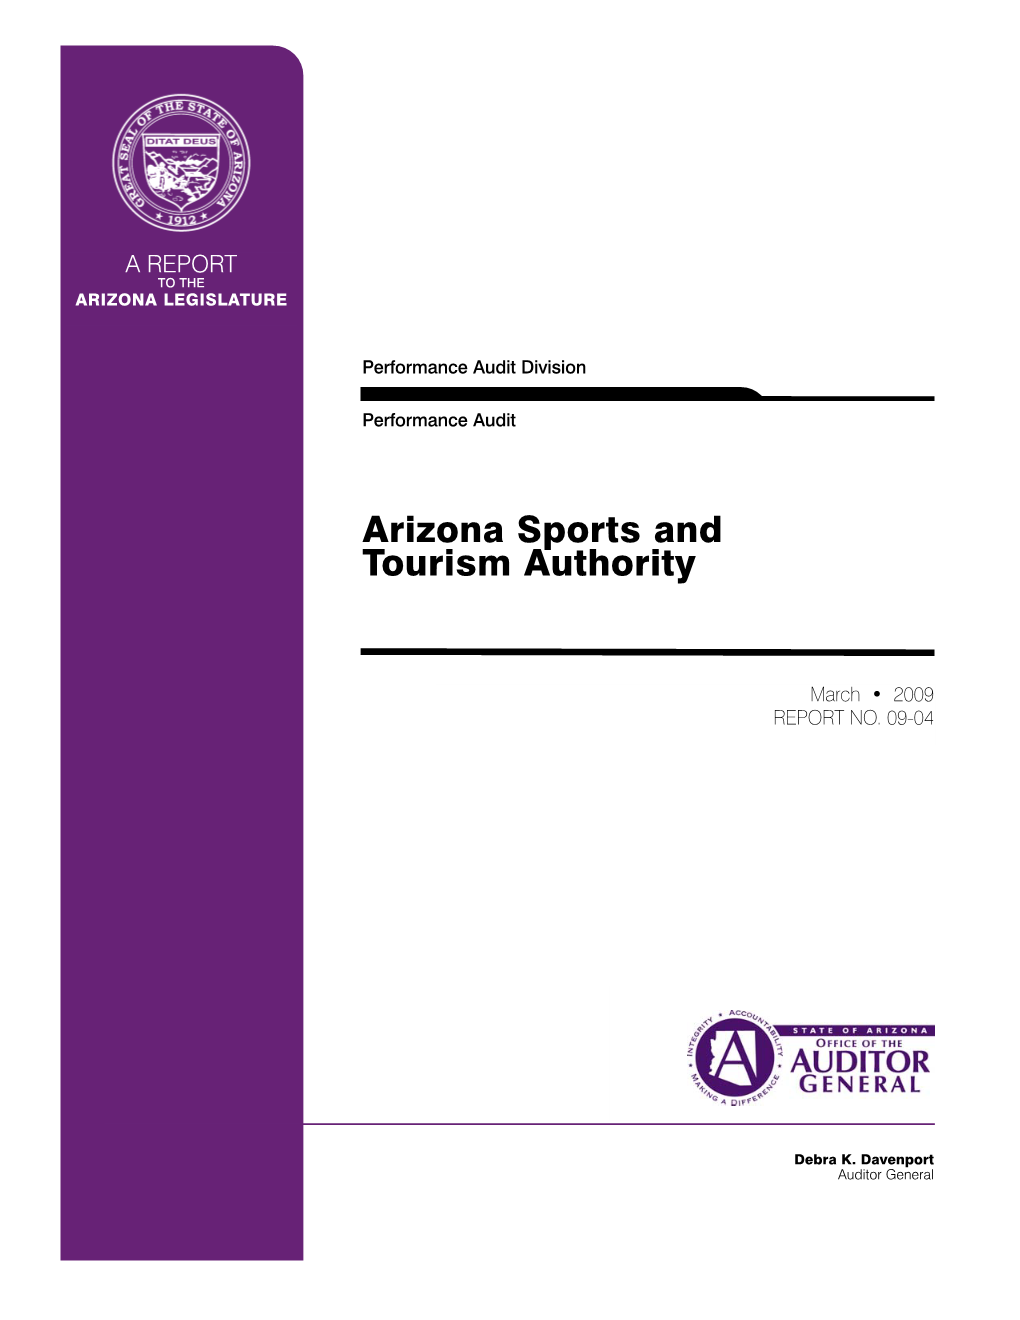 Arizona Sports and Tourism Authority Report